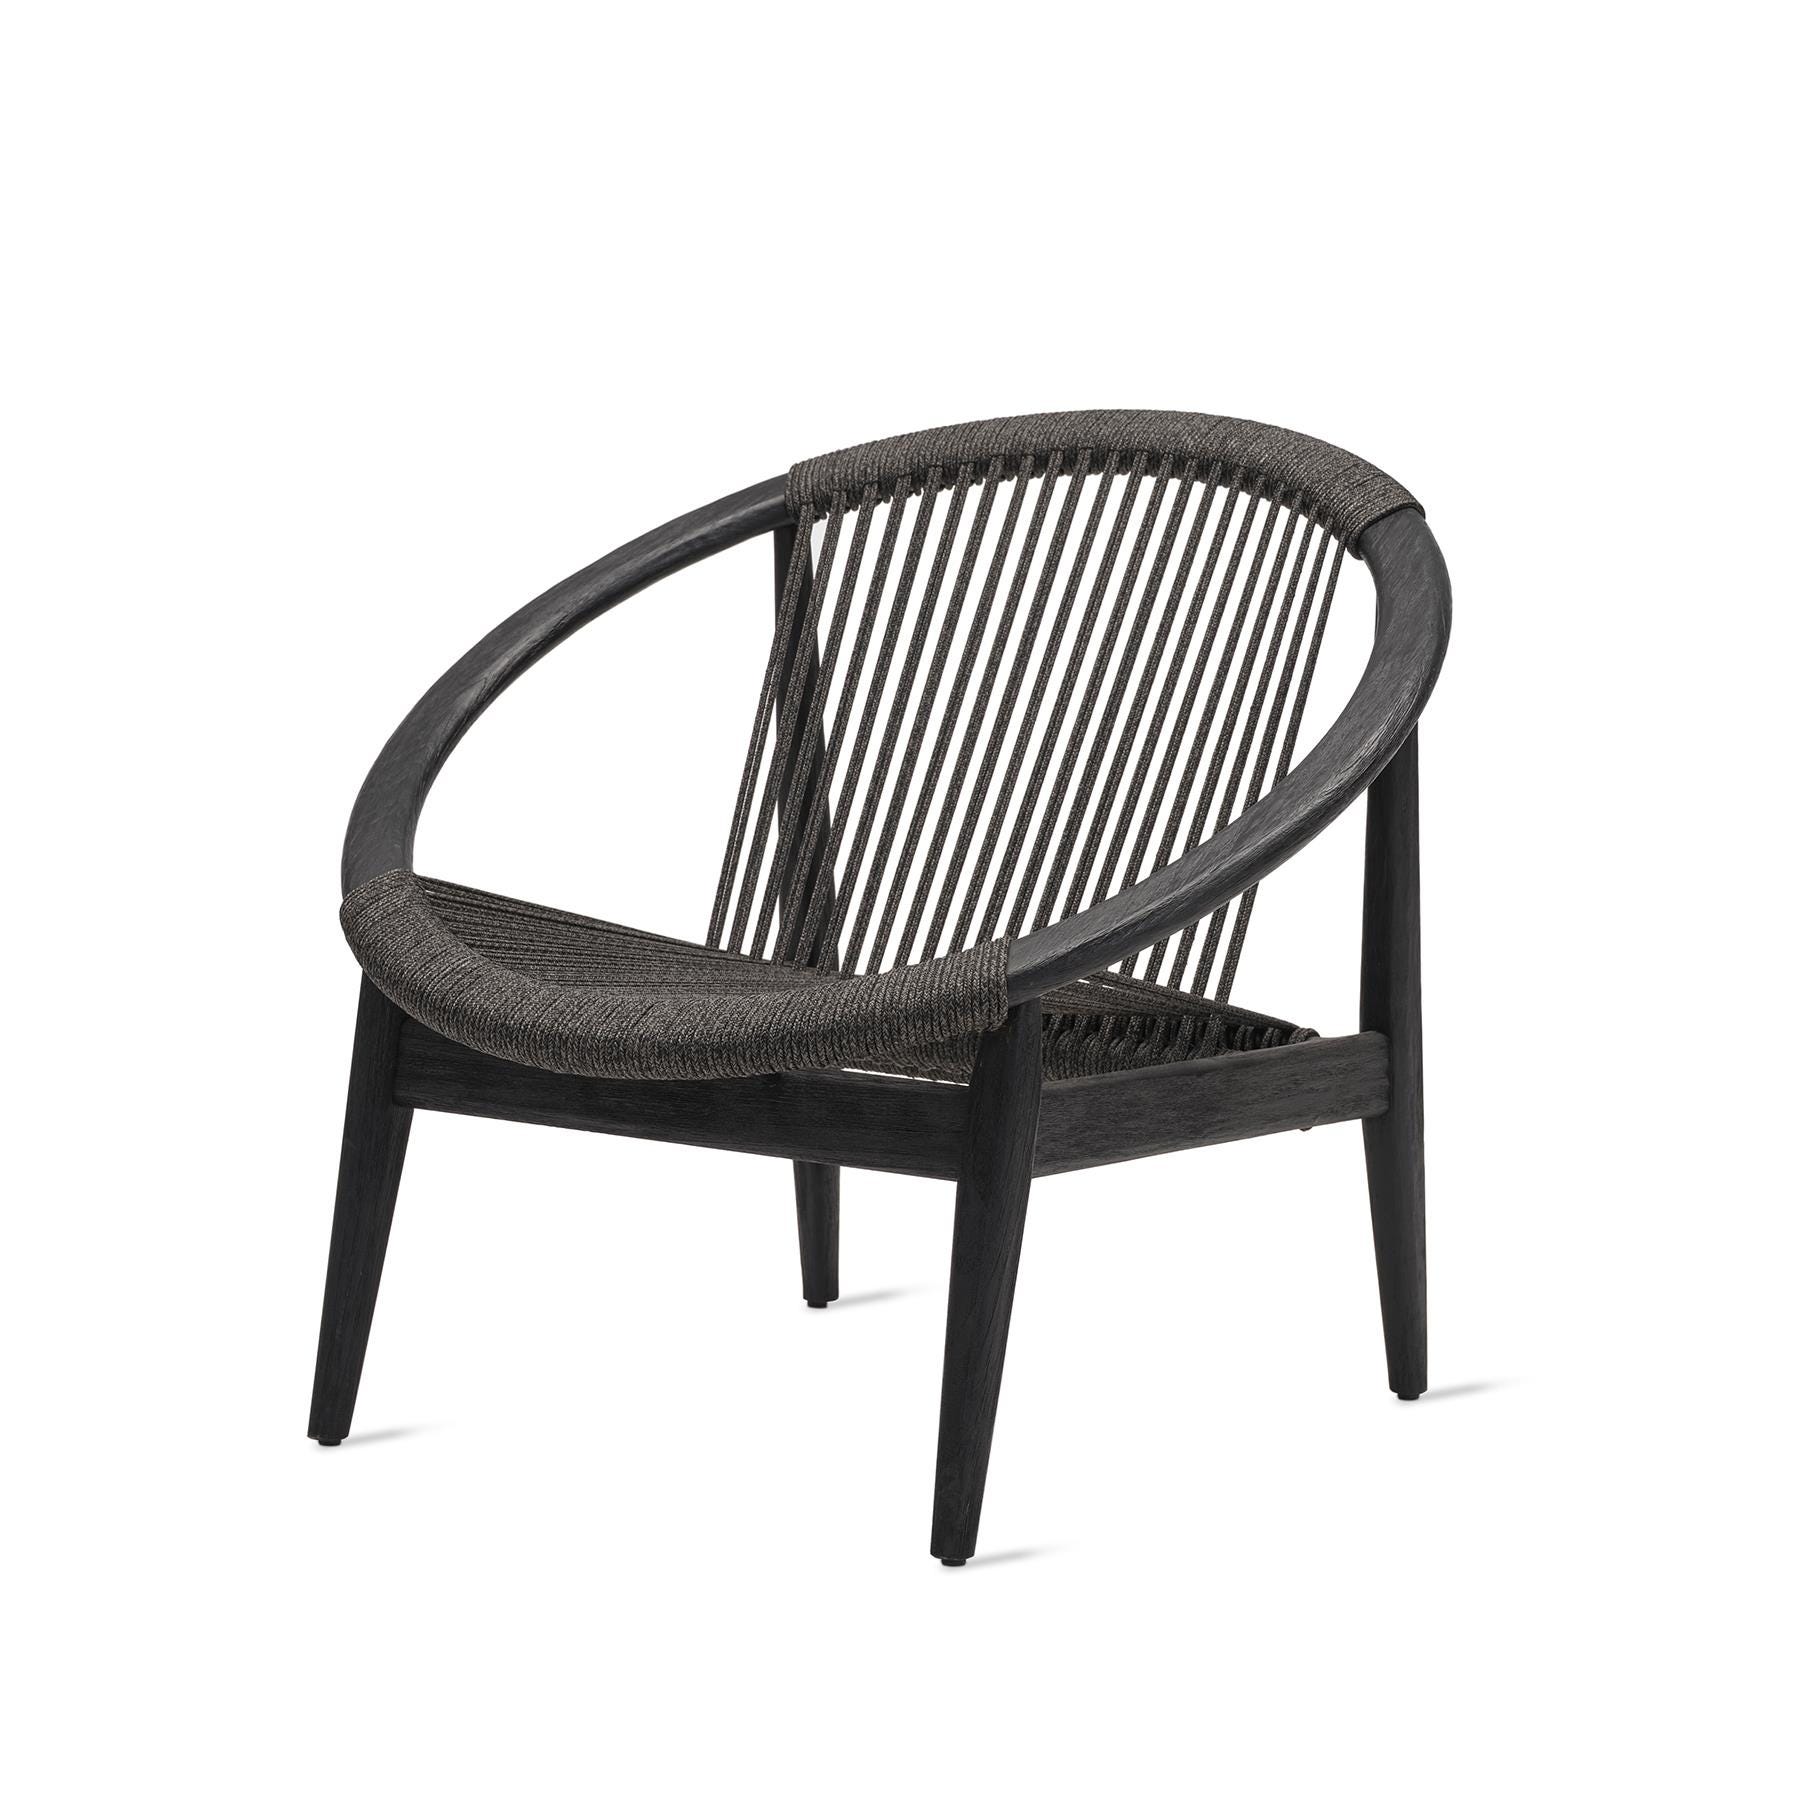 Vincent Sheppard Frida Garden Lounge Chair Black Stained Teak Designer Furniture From Holloways Of Ludlow